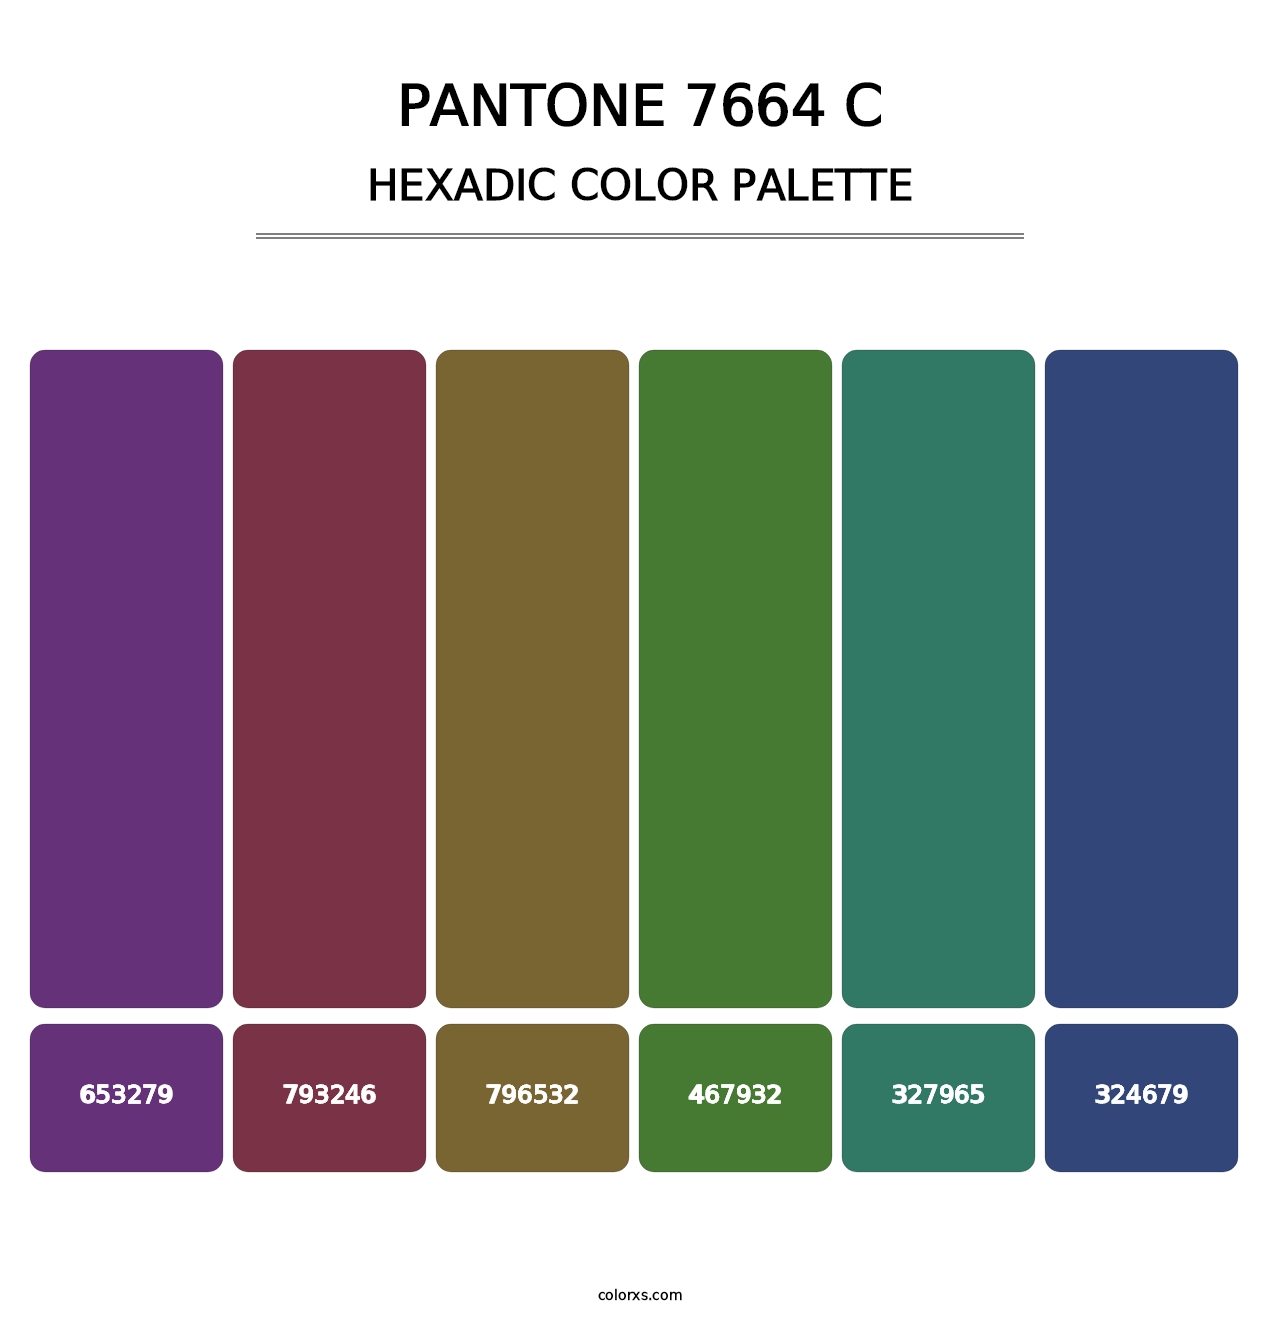 PANTONE 7664 C - Hexadic Color Palette